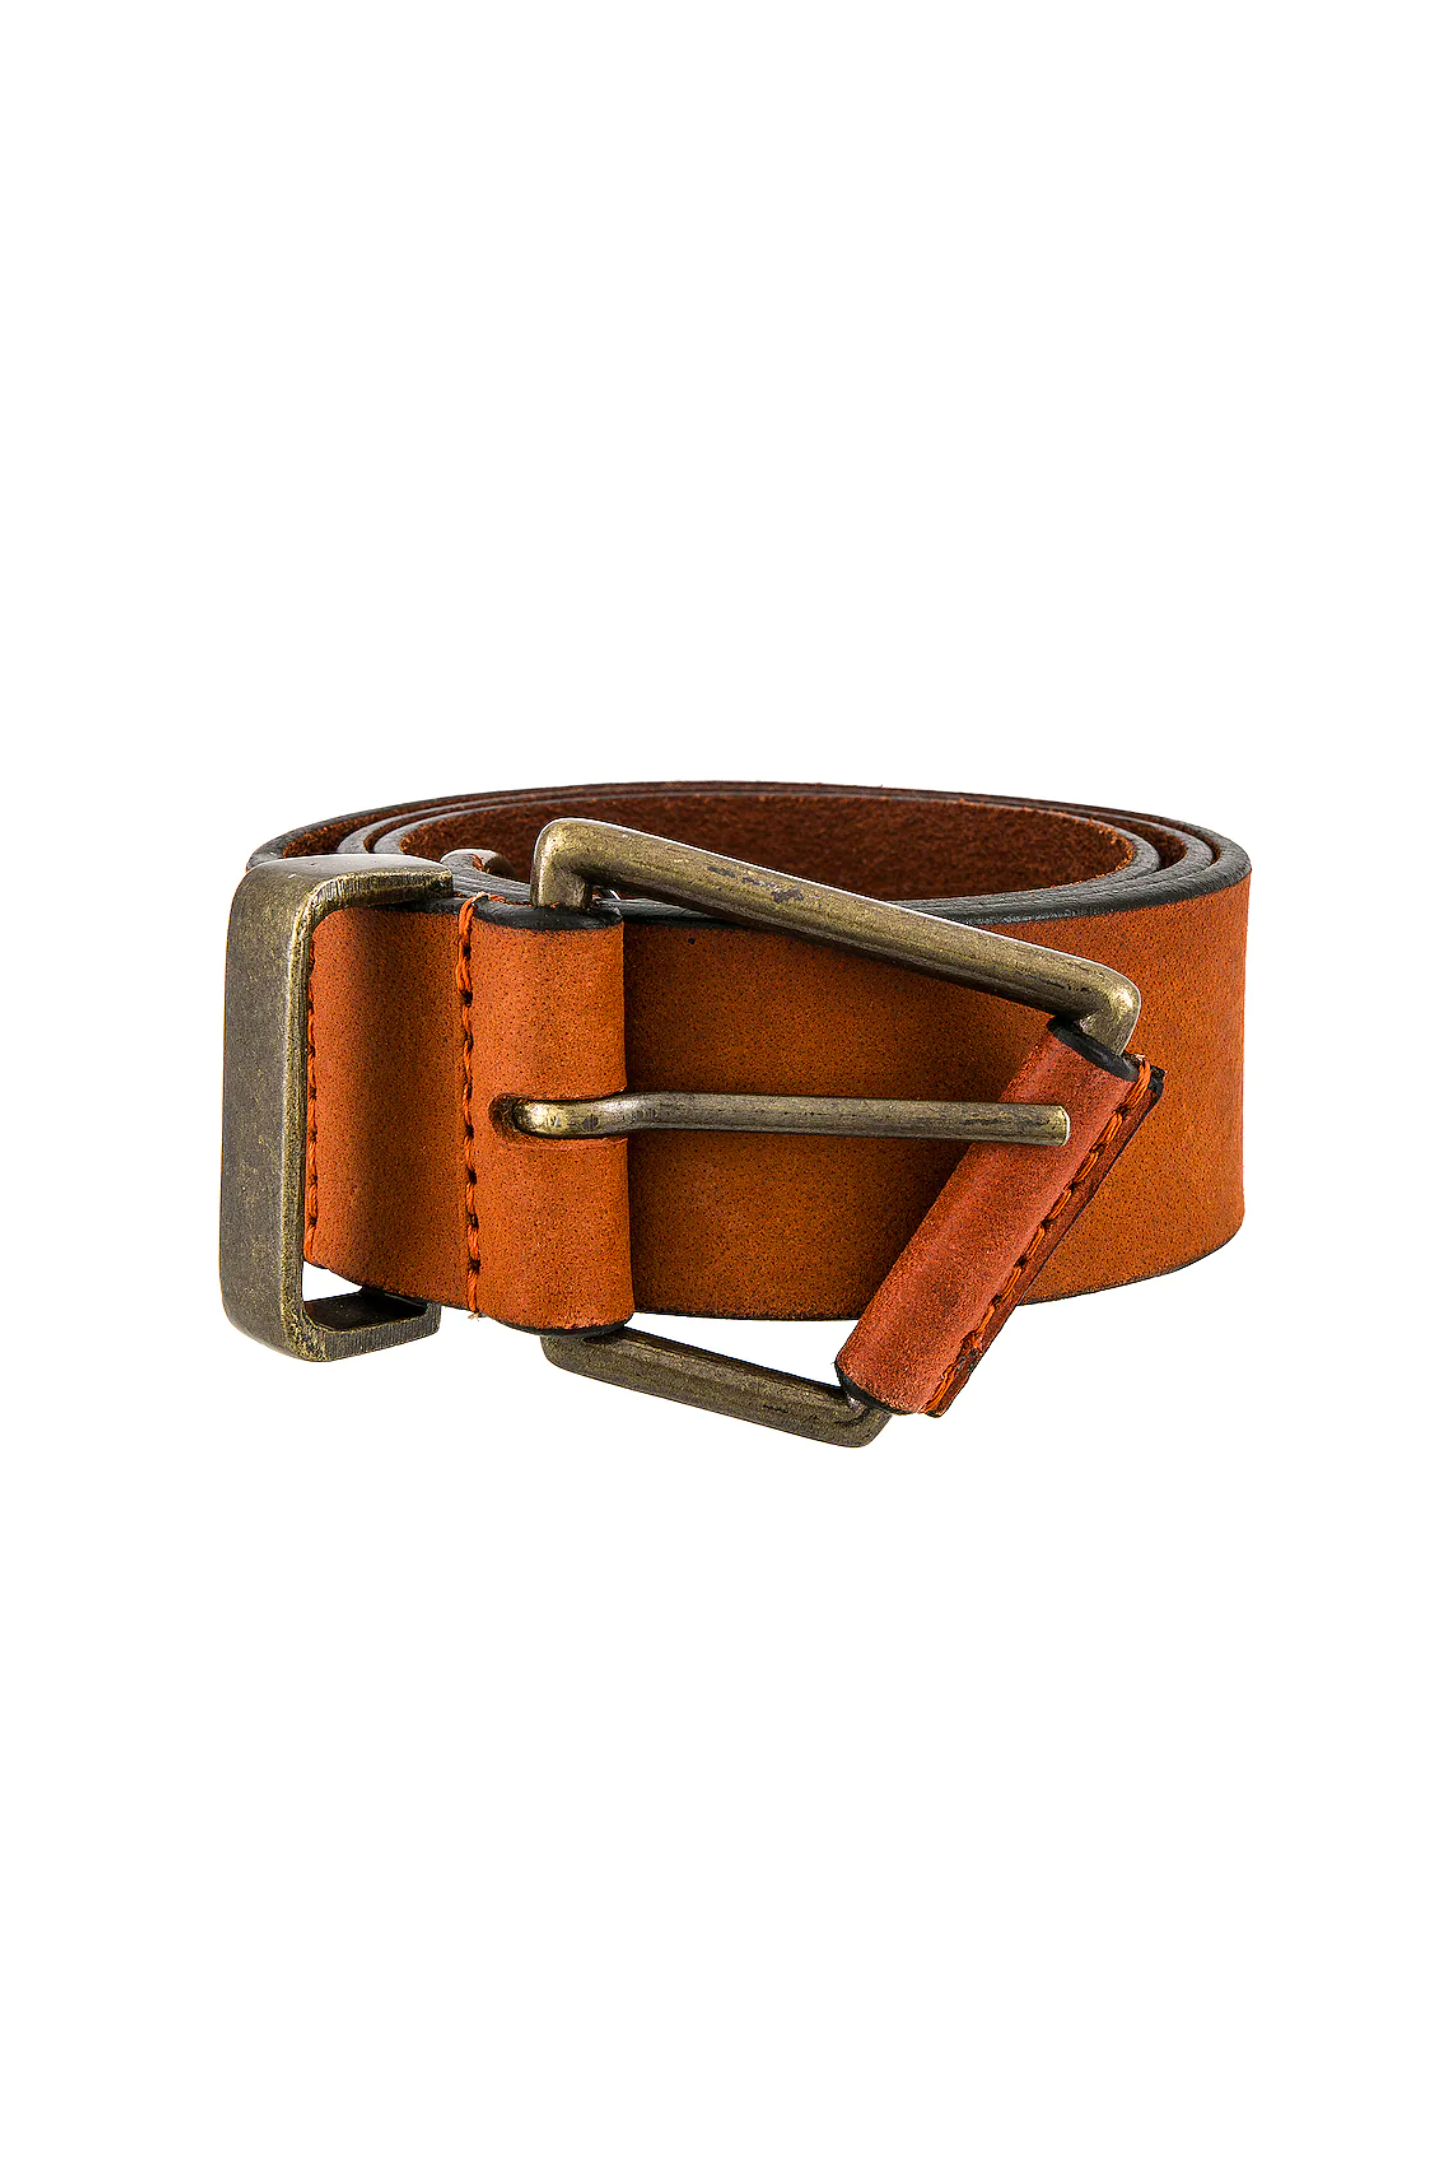 Free People | Getty Leather Belt - Sedona